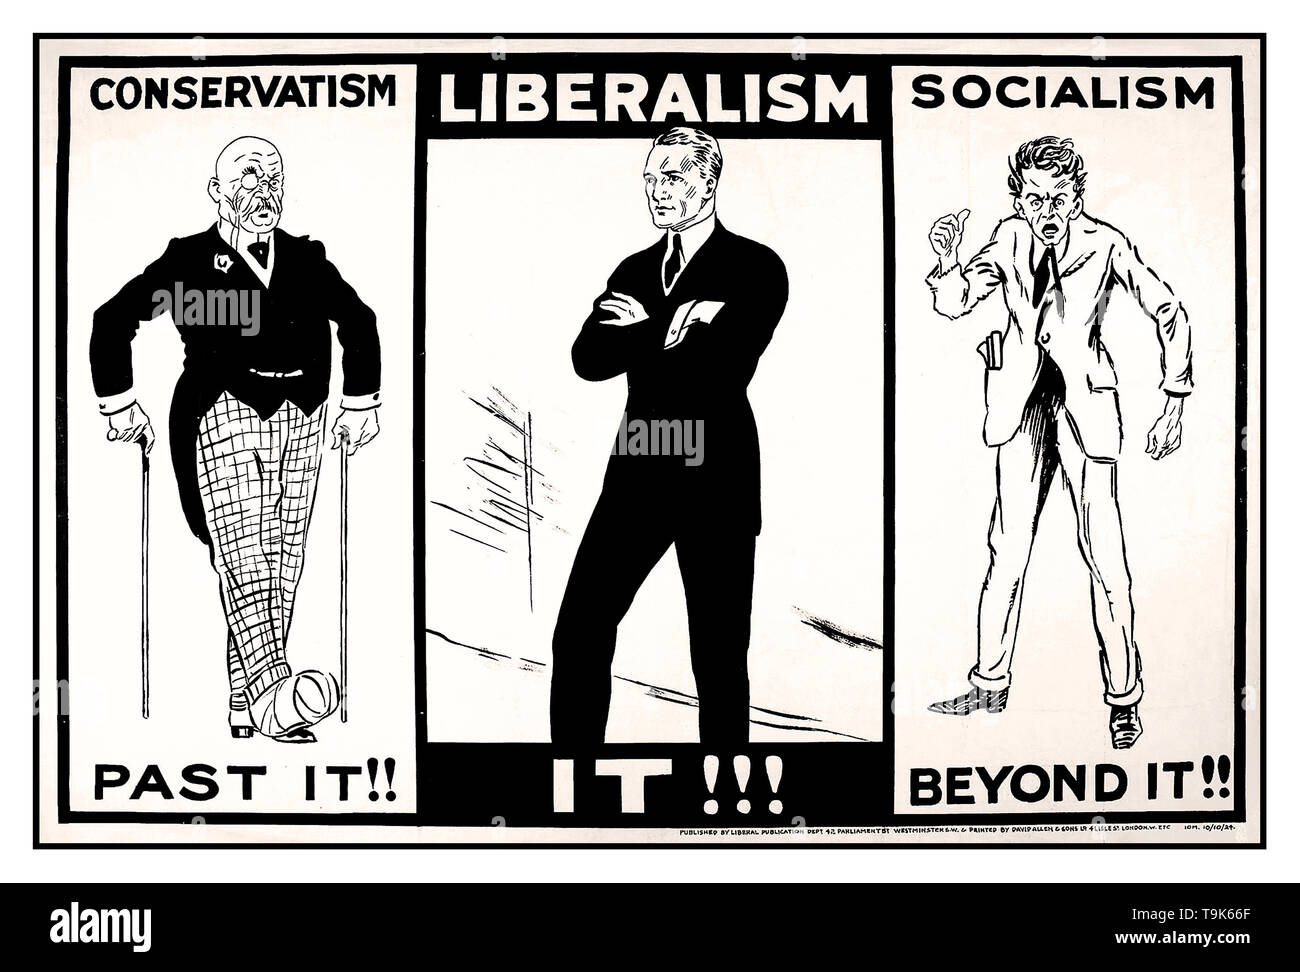 Jahrgang alte historische UK Britische politische Propaganda Plakat 1924 für die Liberale Partei Plakat-UK ... Konservatismus vorbei.. Liberalismus!!! Sozialismus jenseits!! Stockfoto